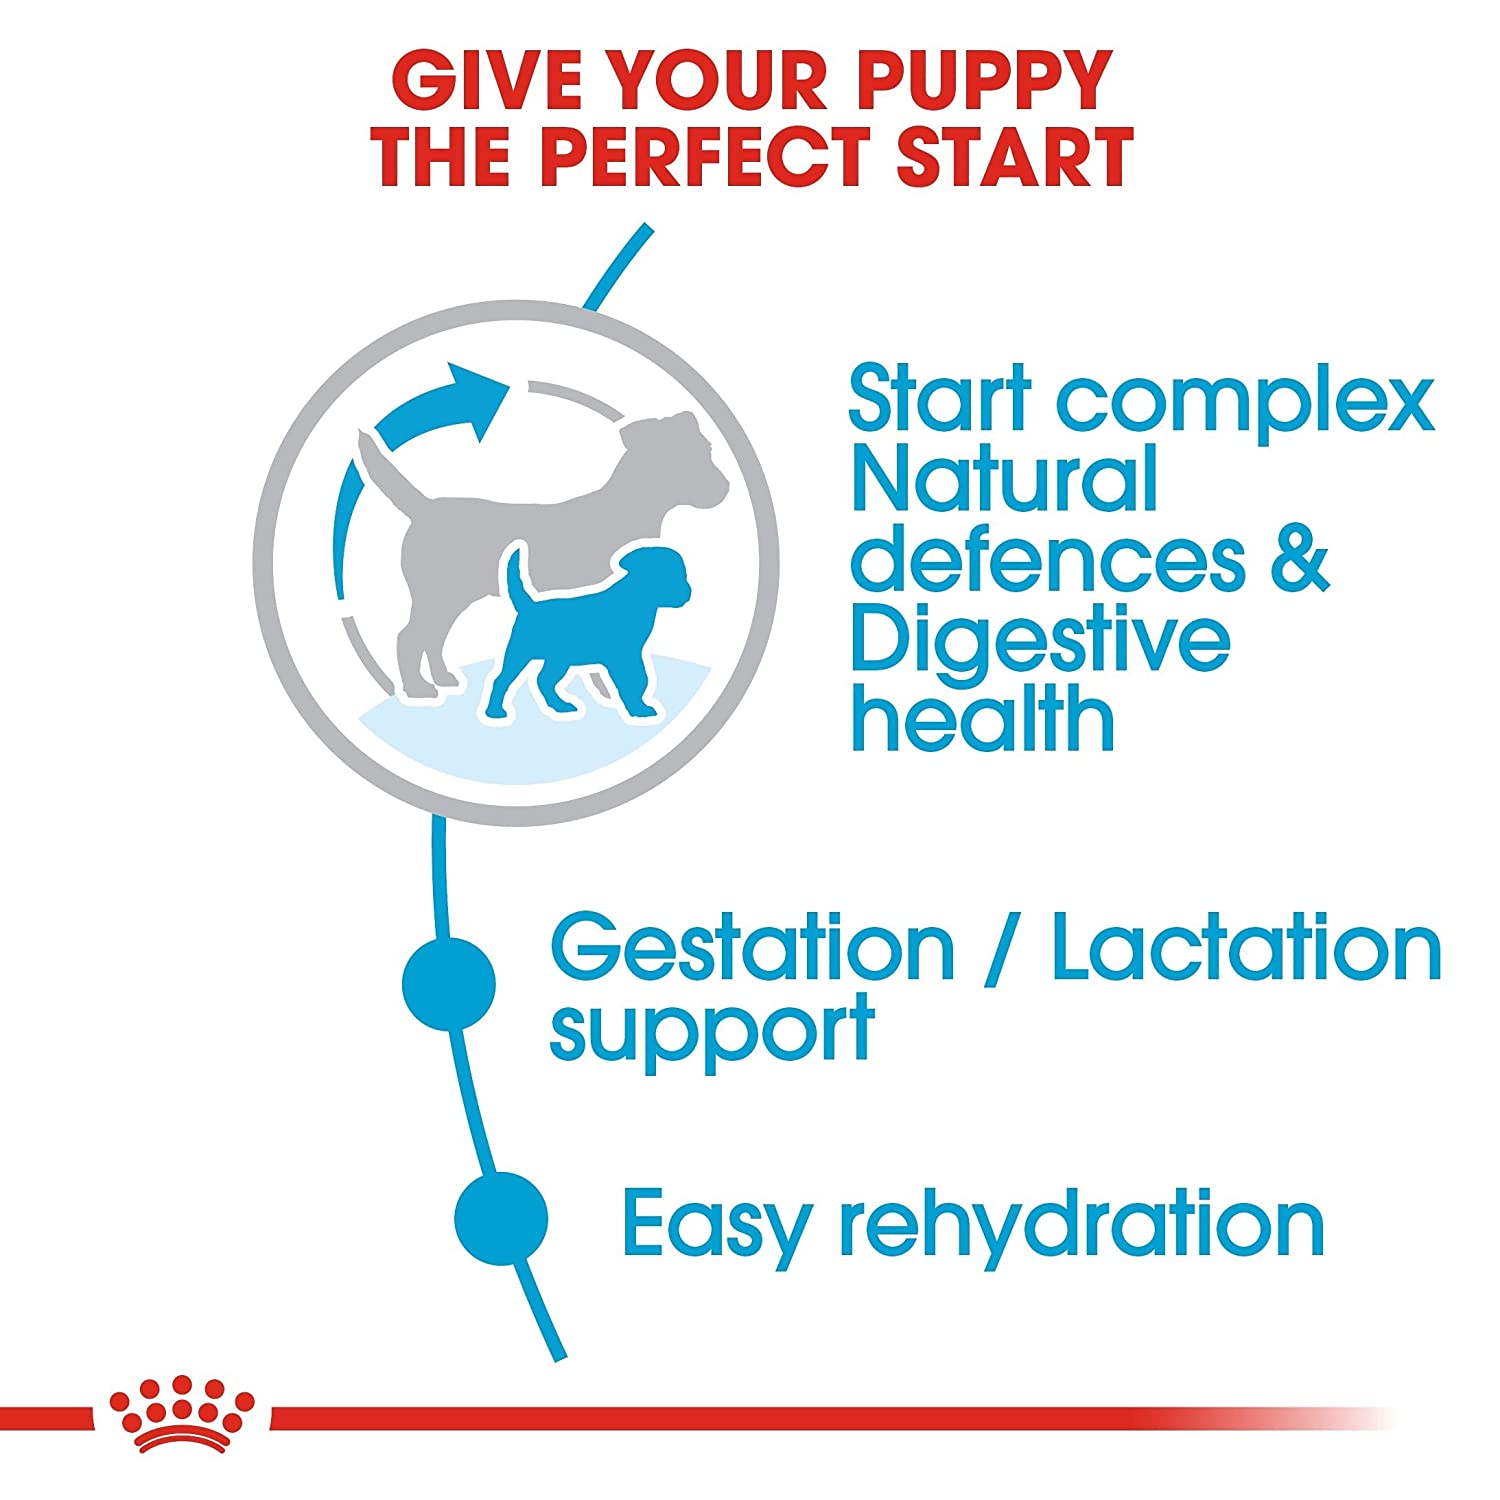 Royal Canin Mini Starter Mother & Baby Dog Dry Dog Food